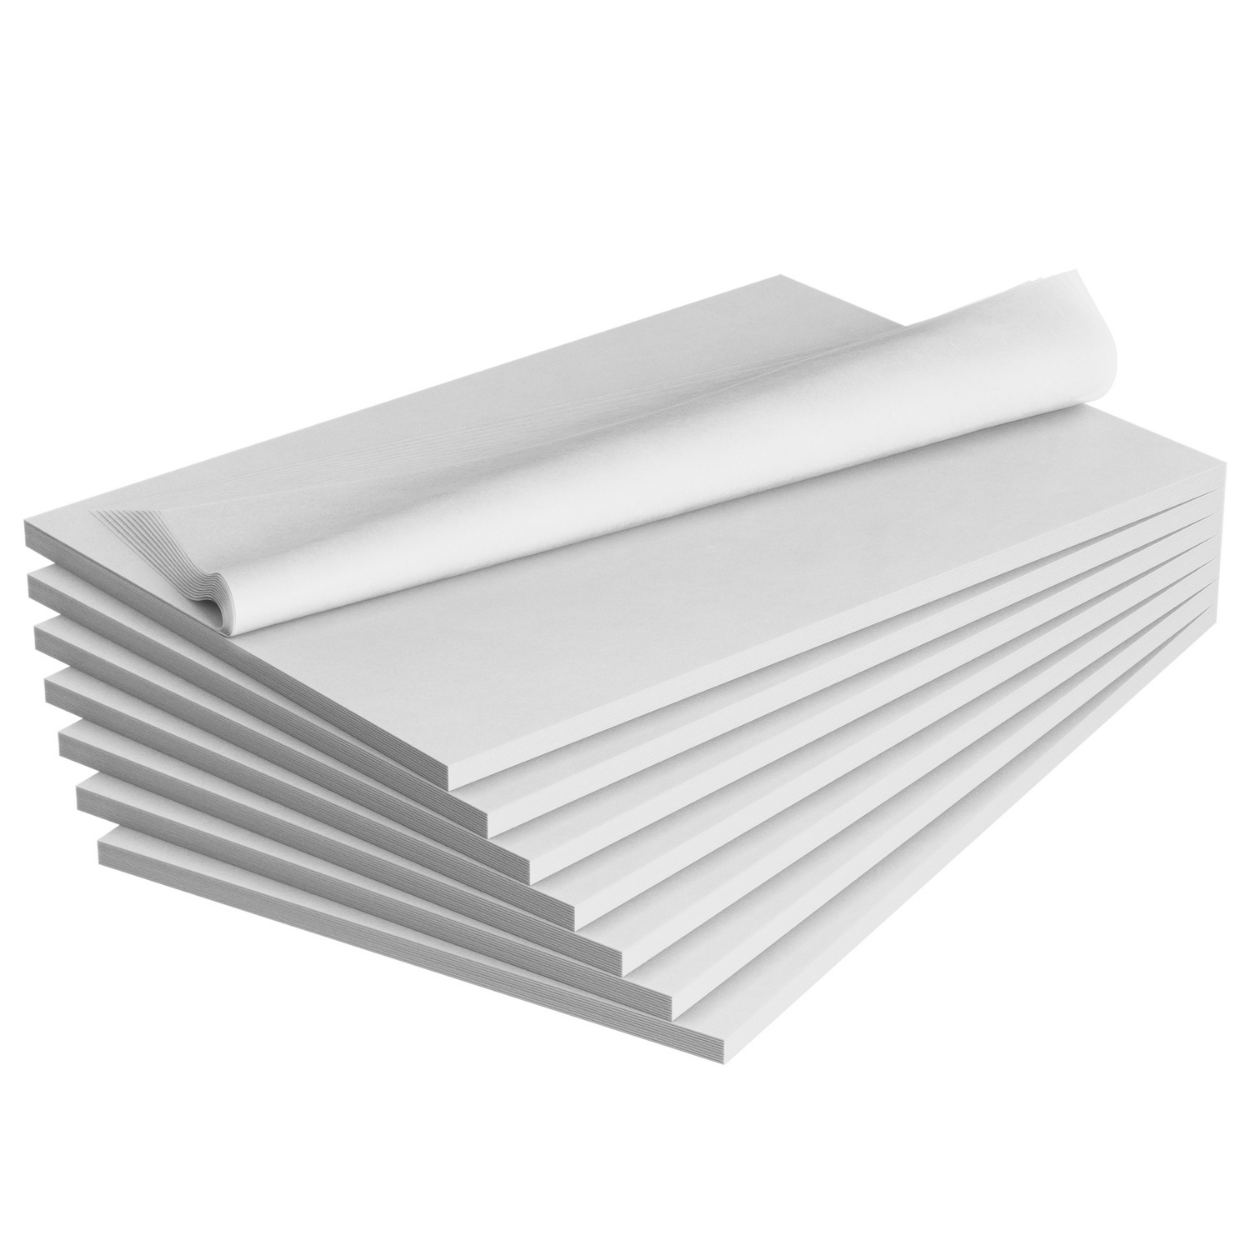 NEBURORA 120 Sheets White Tissue Paper 14 x 20 Inches White Wrapping Tissue  P